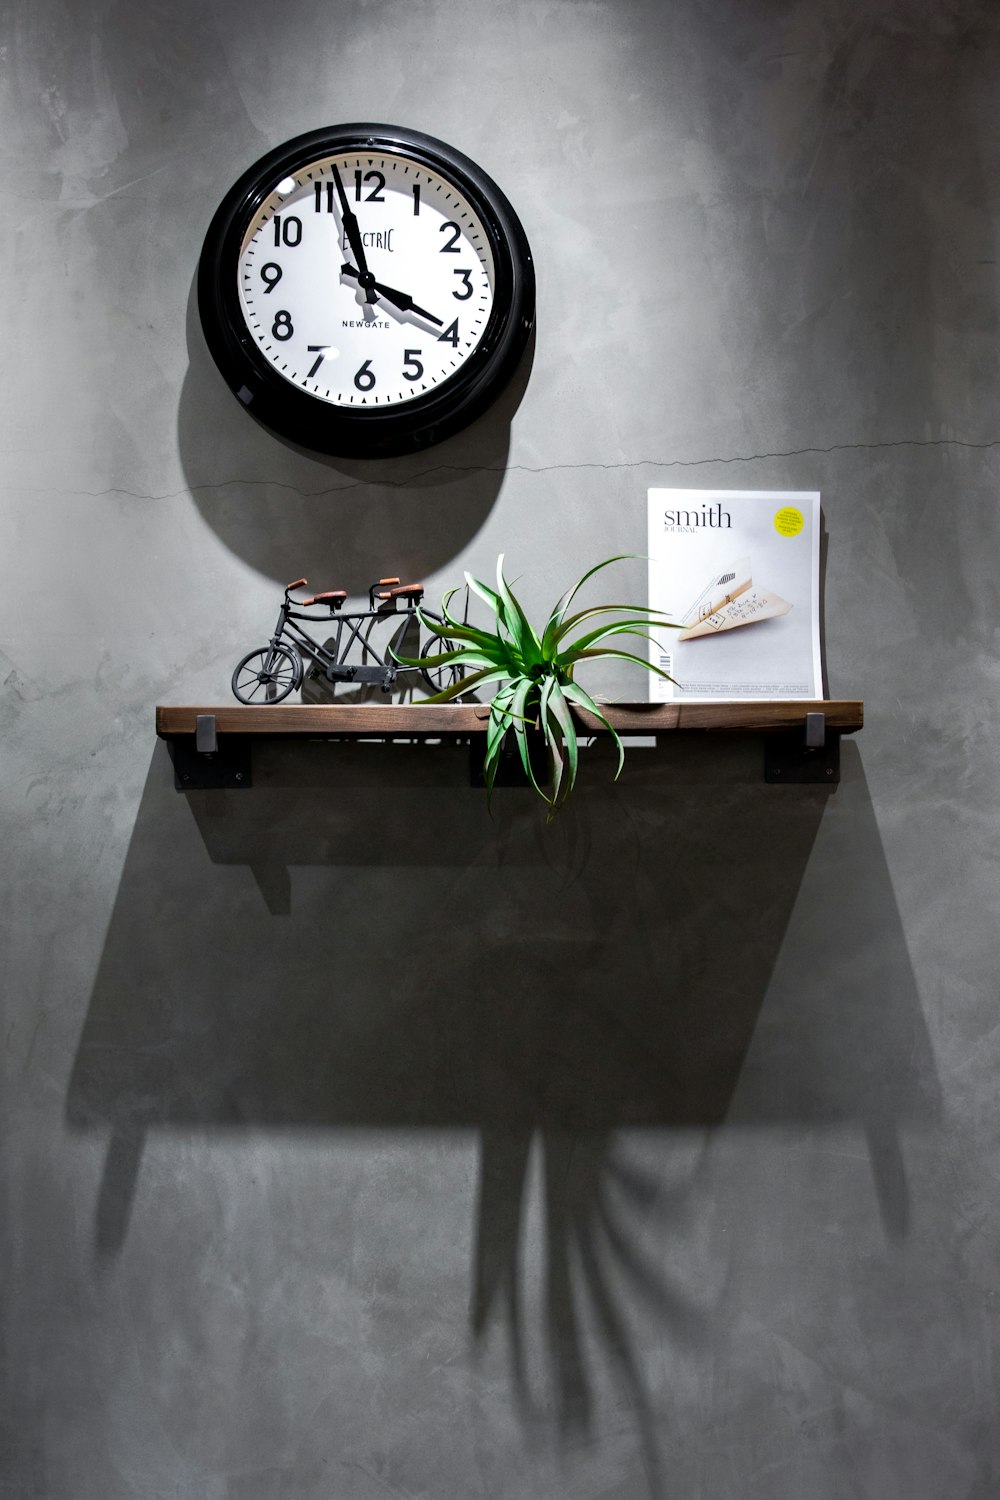 black and white analog wall clock displaying 3:58